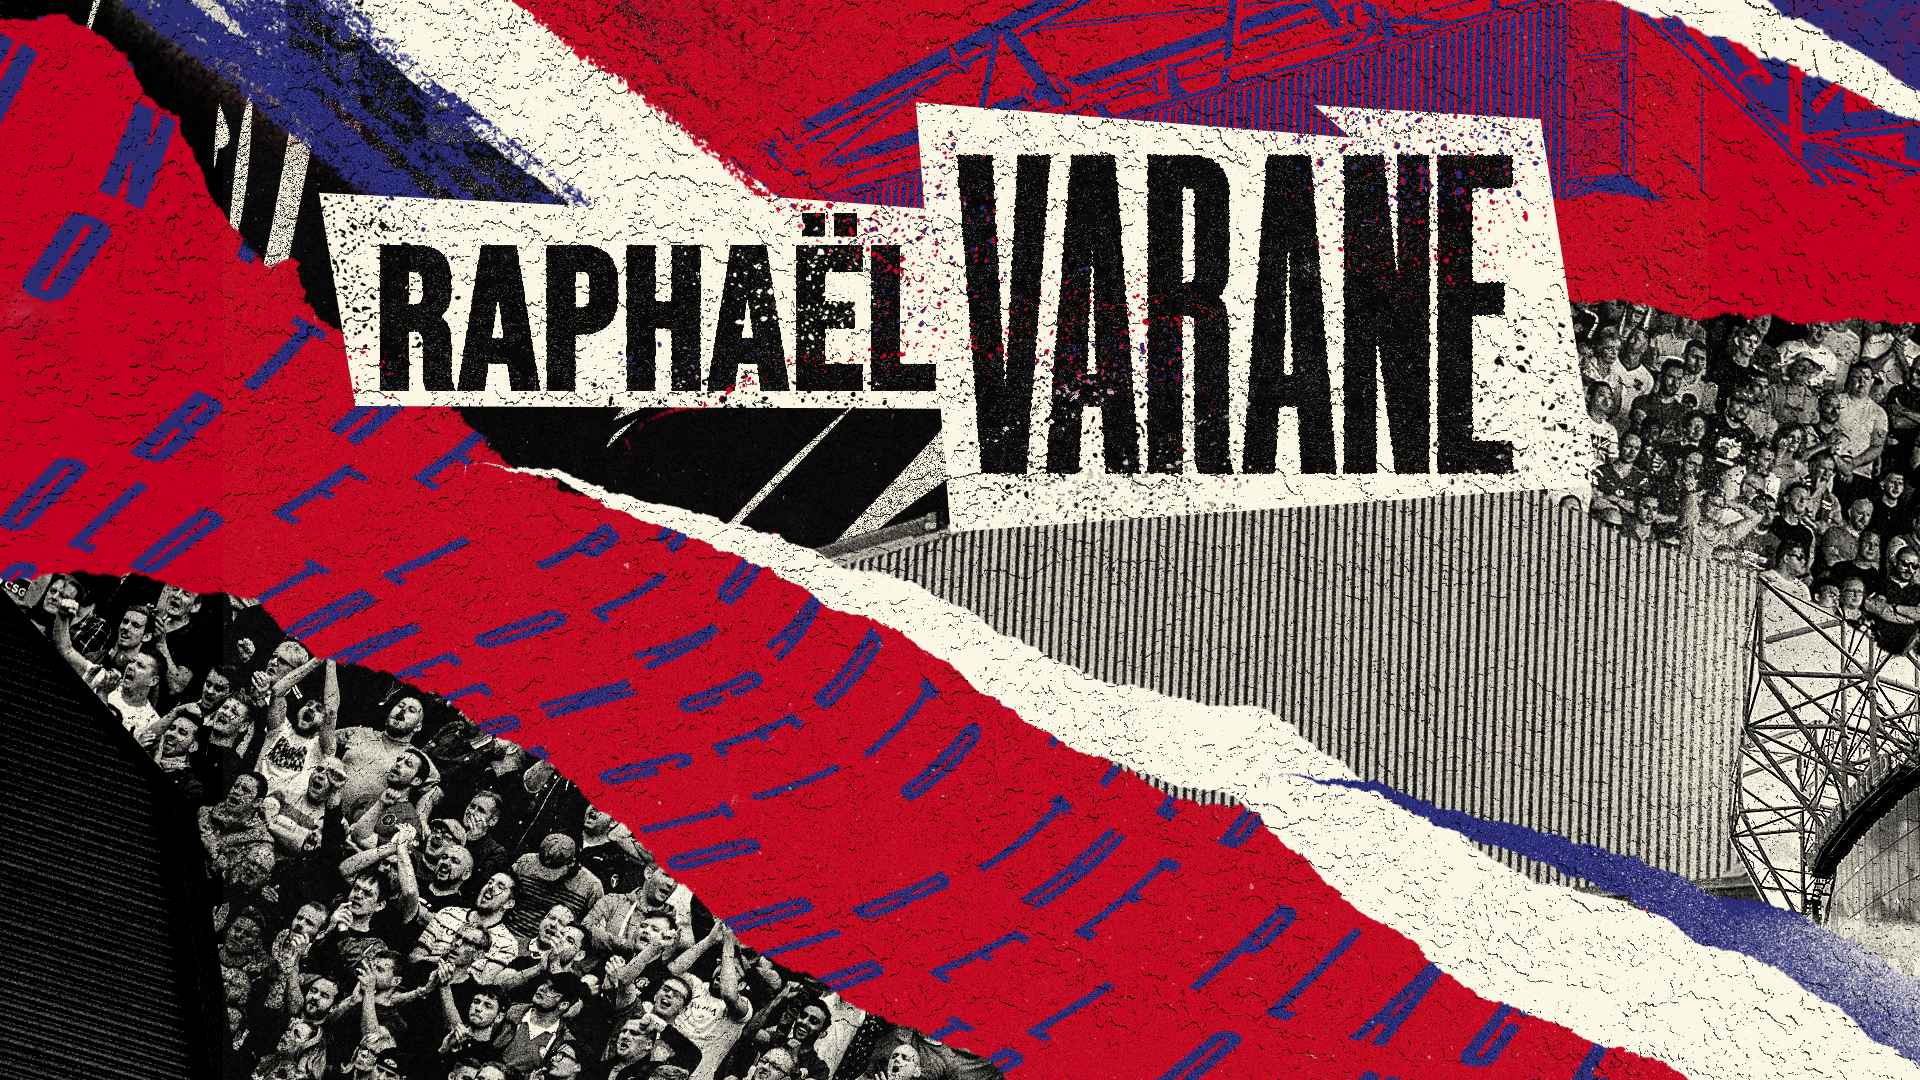 Man Utd reaches agreement for Raphael Varane transfer from Real Madrid